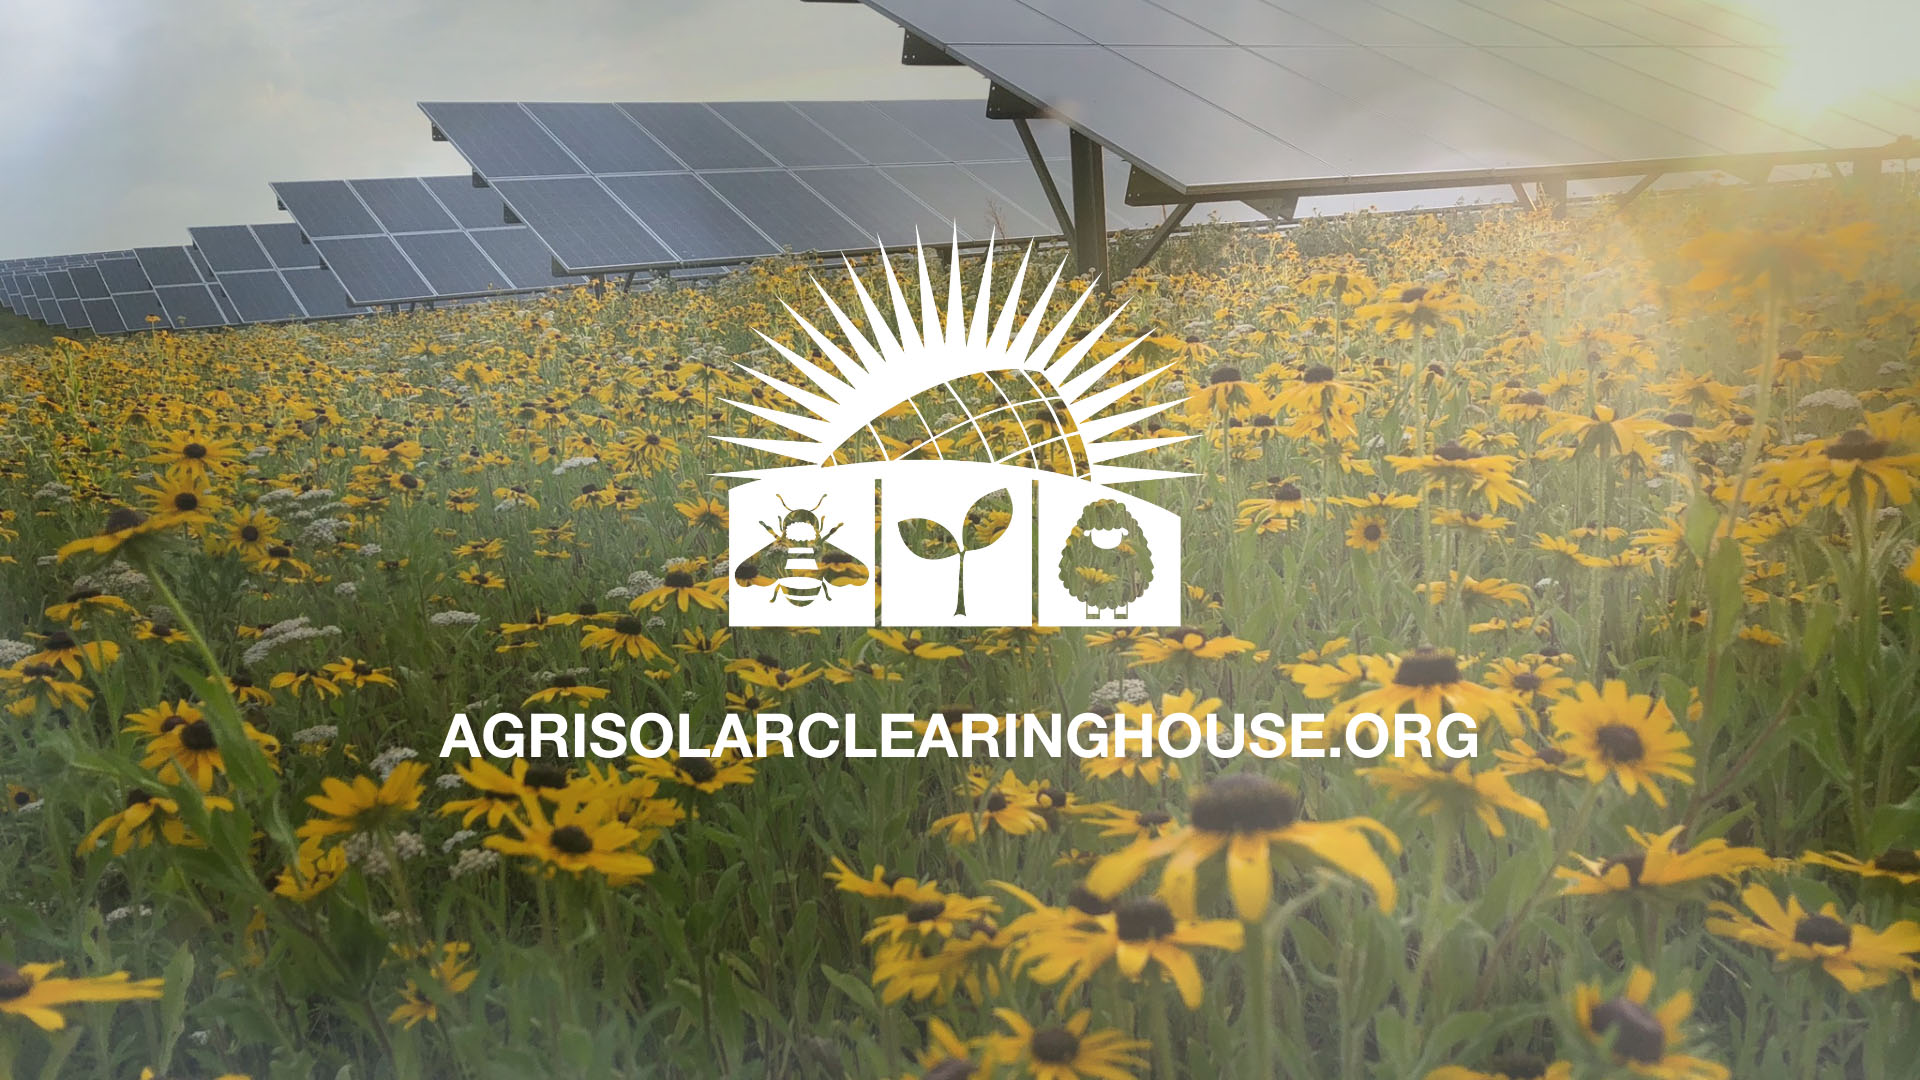 Agrisolar clearinghouse logo